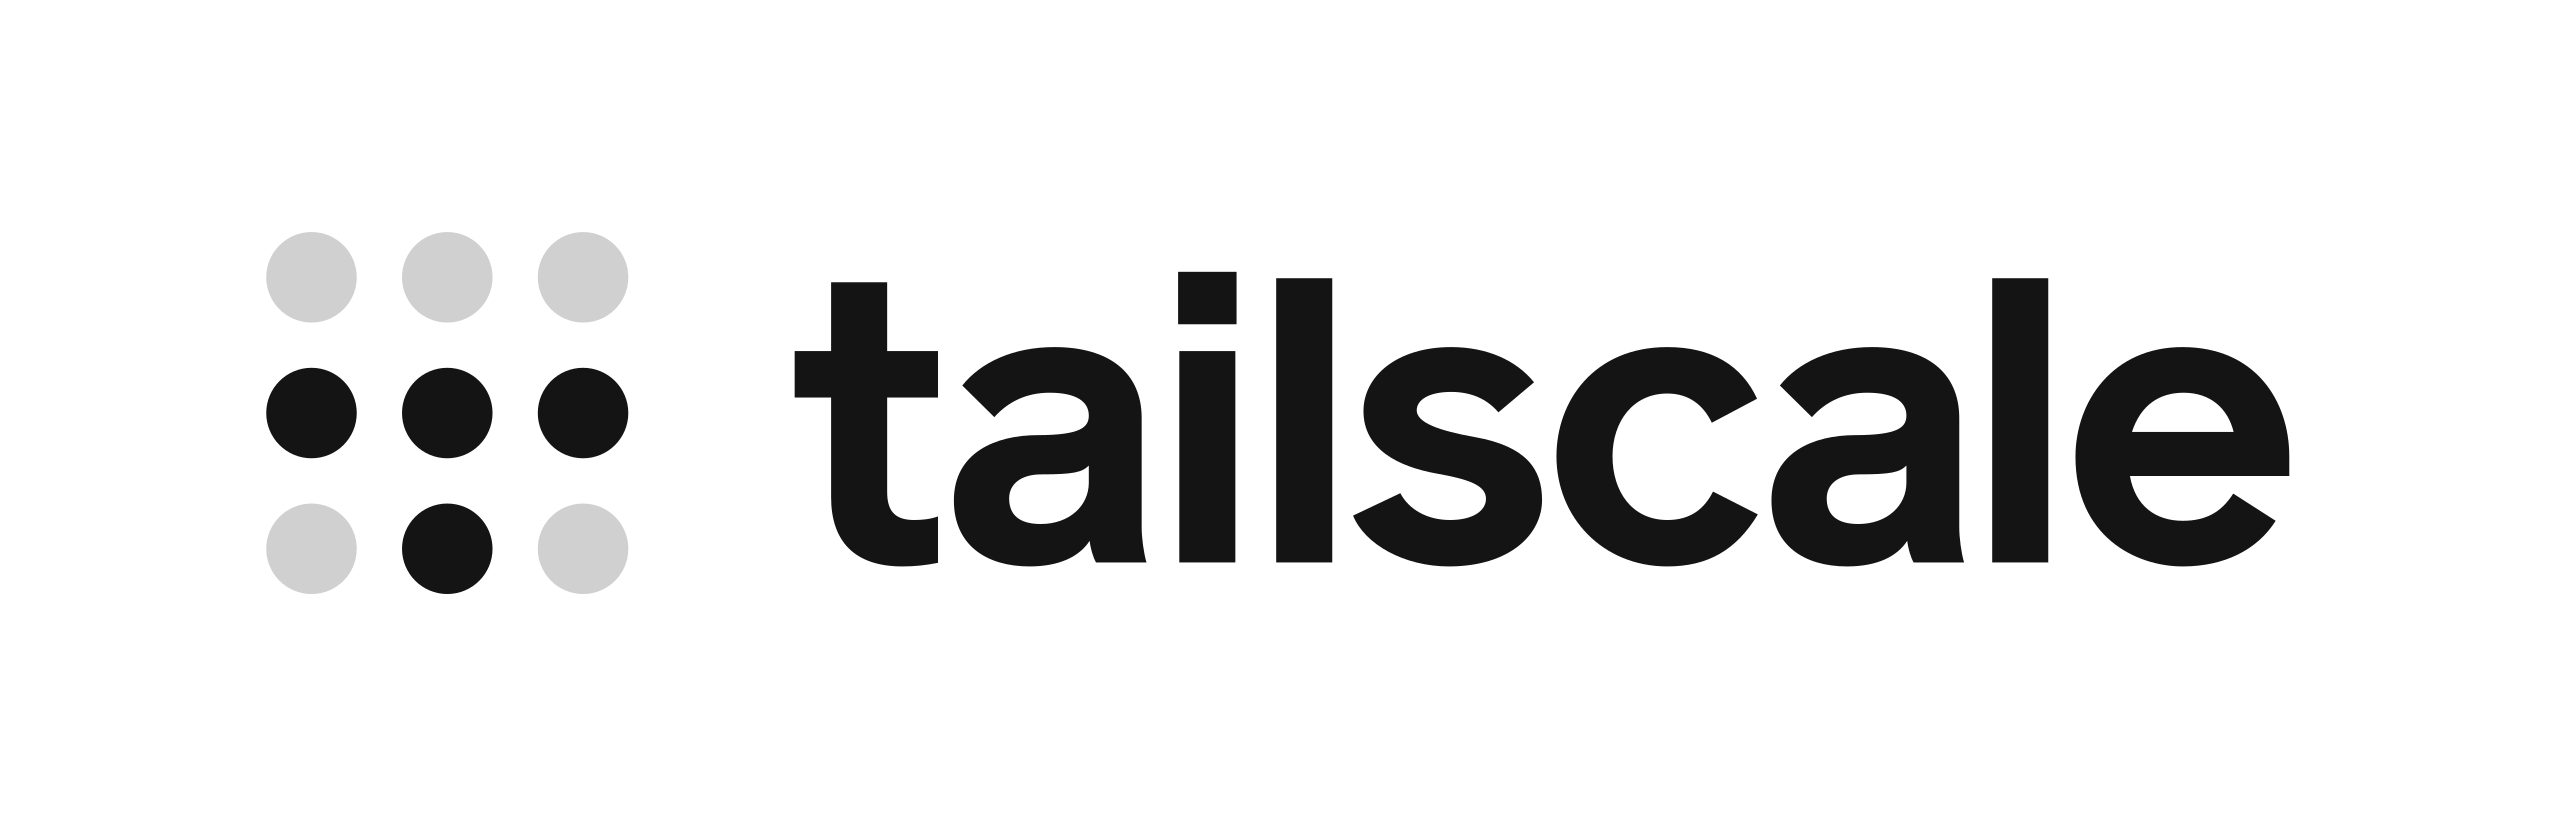 tailscale logo